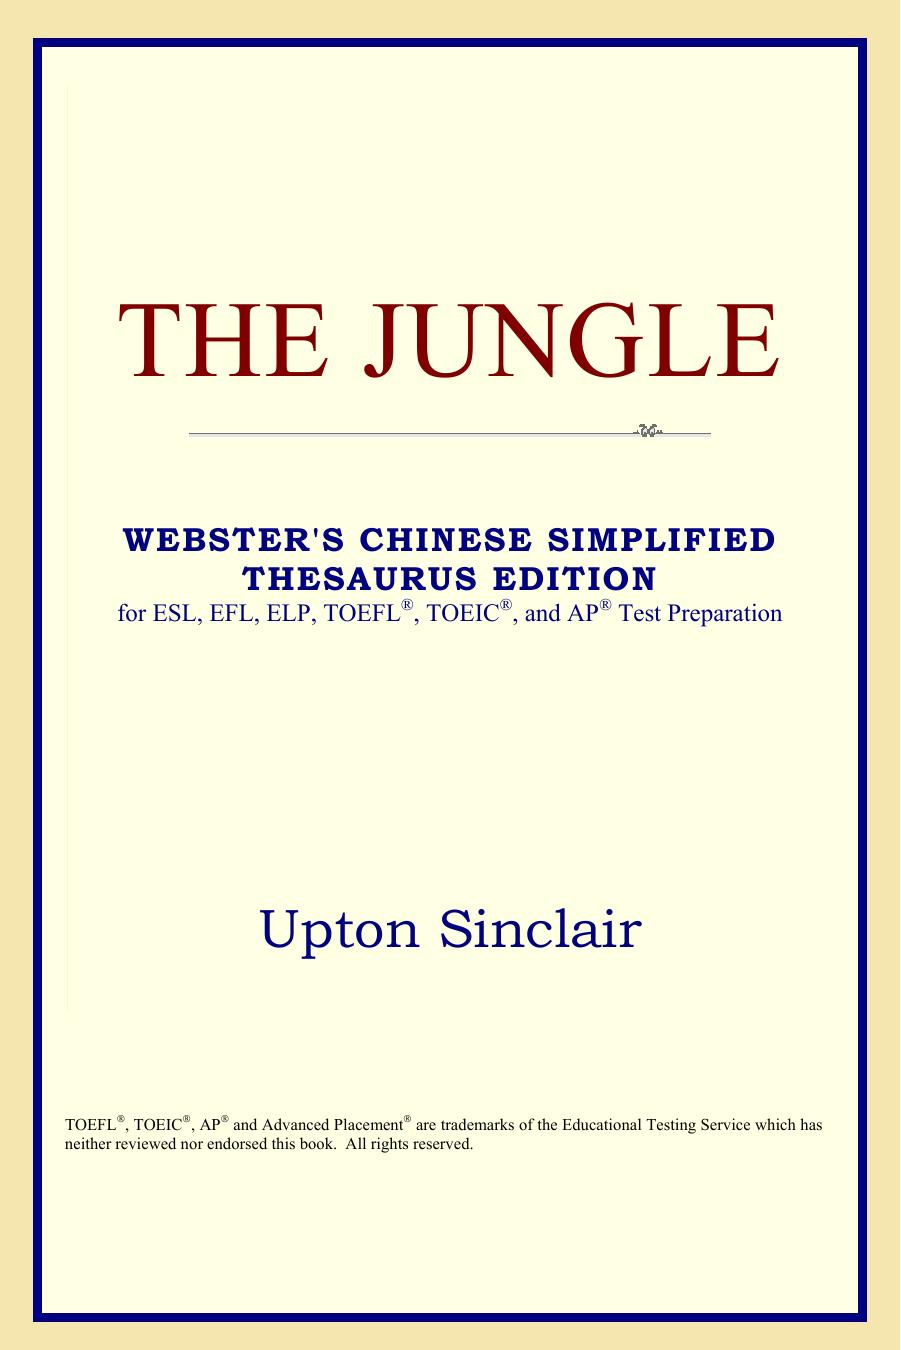 The Jungle - Thesaurus Edition